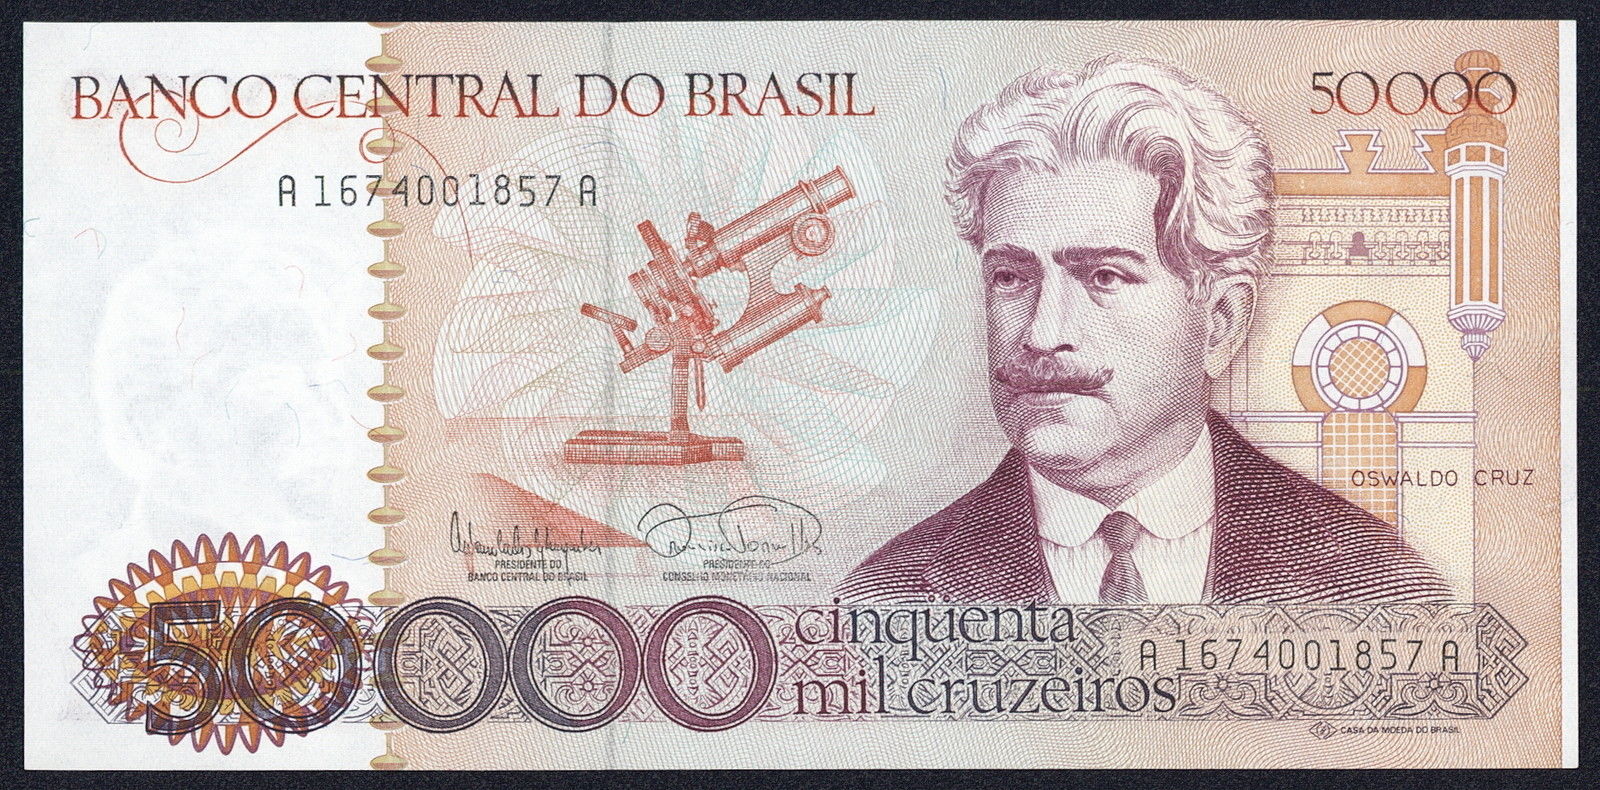 BRAZIL-BANCO CENTRAL DO BRASIL 50,000 CINQUENT MIL CRUZEIROS *9751A PAPER  MONEY